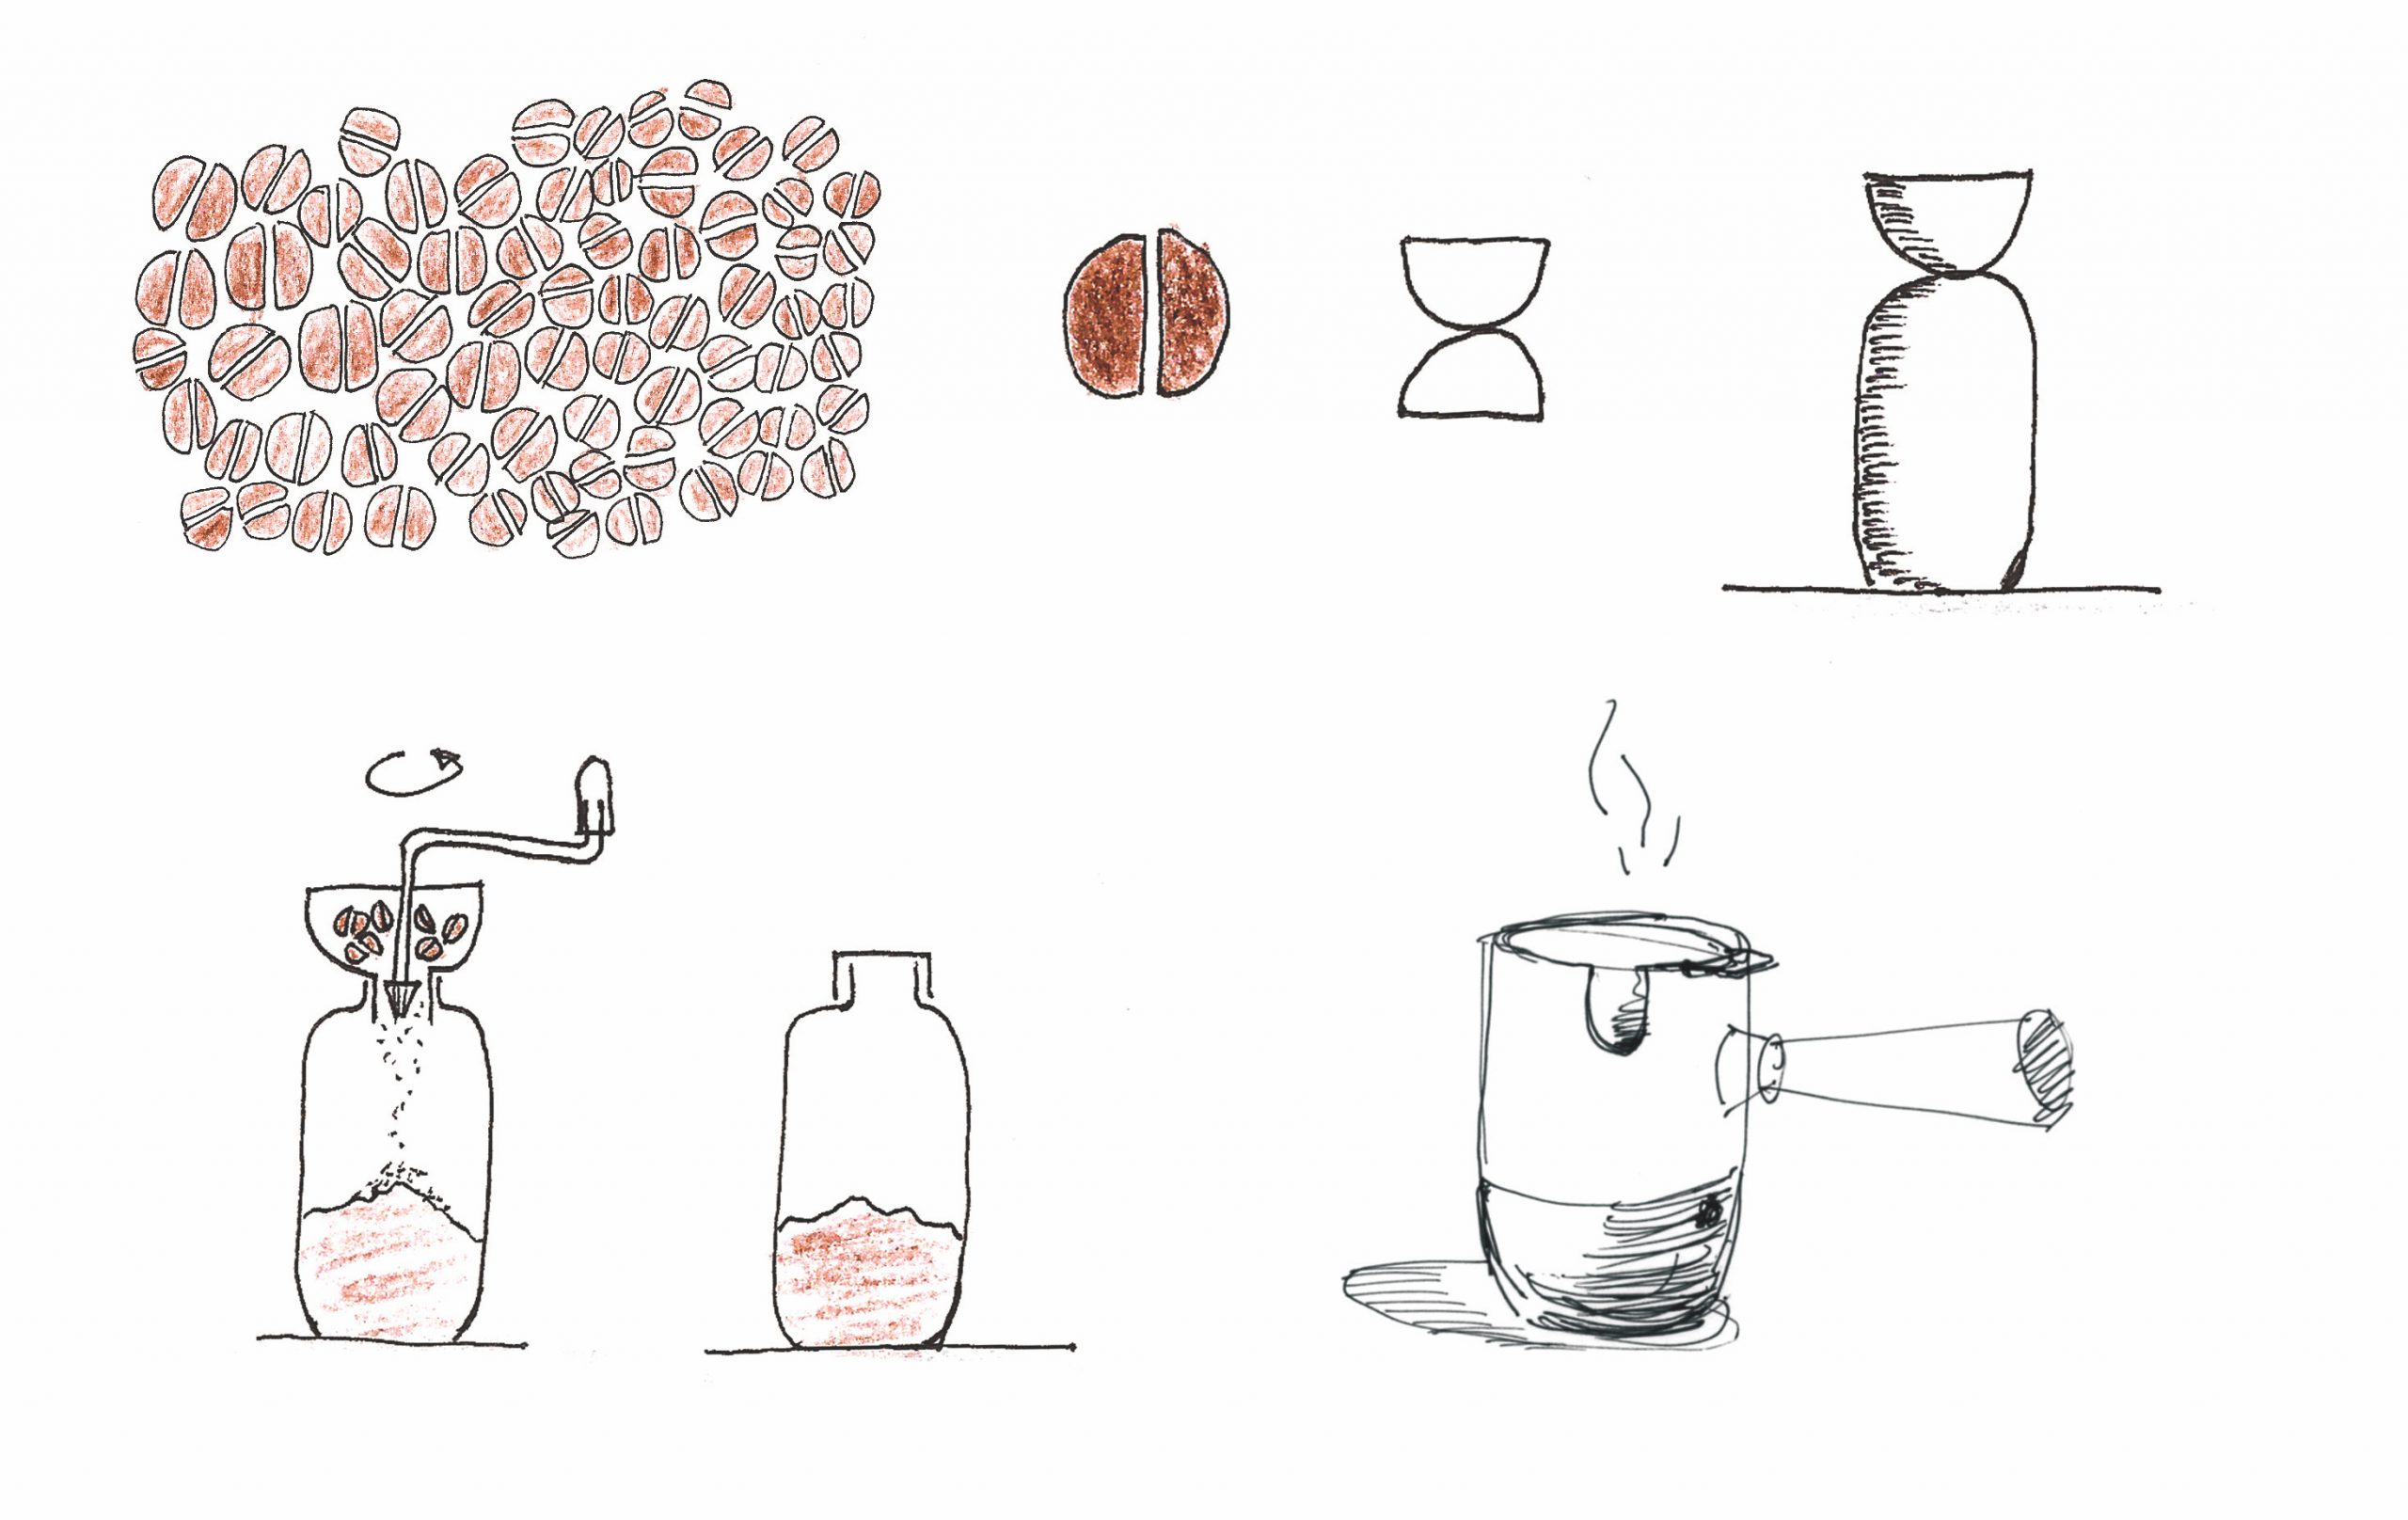 Process sketch of Collar coffee set by Debiasi Sandri for Stelton